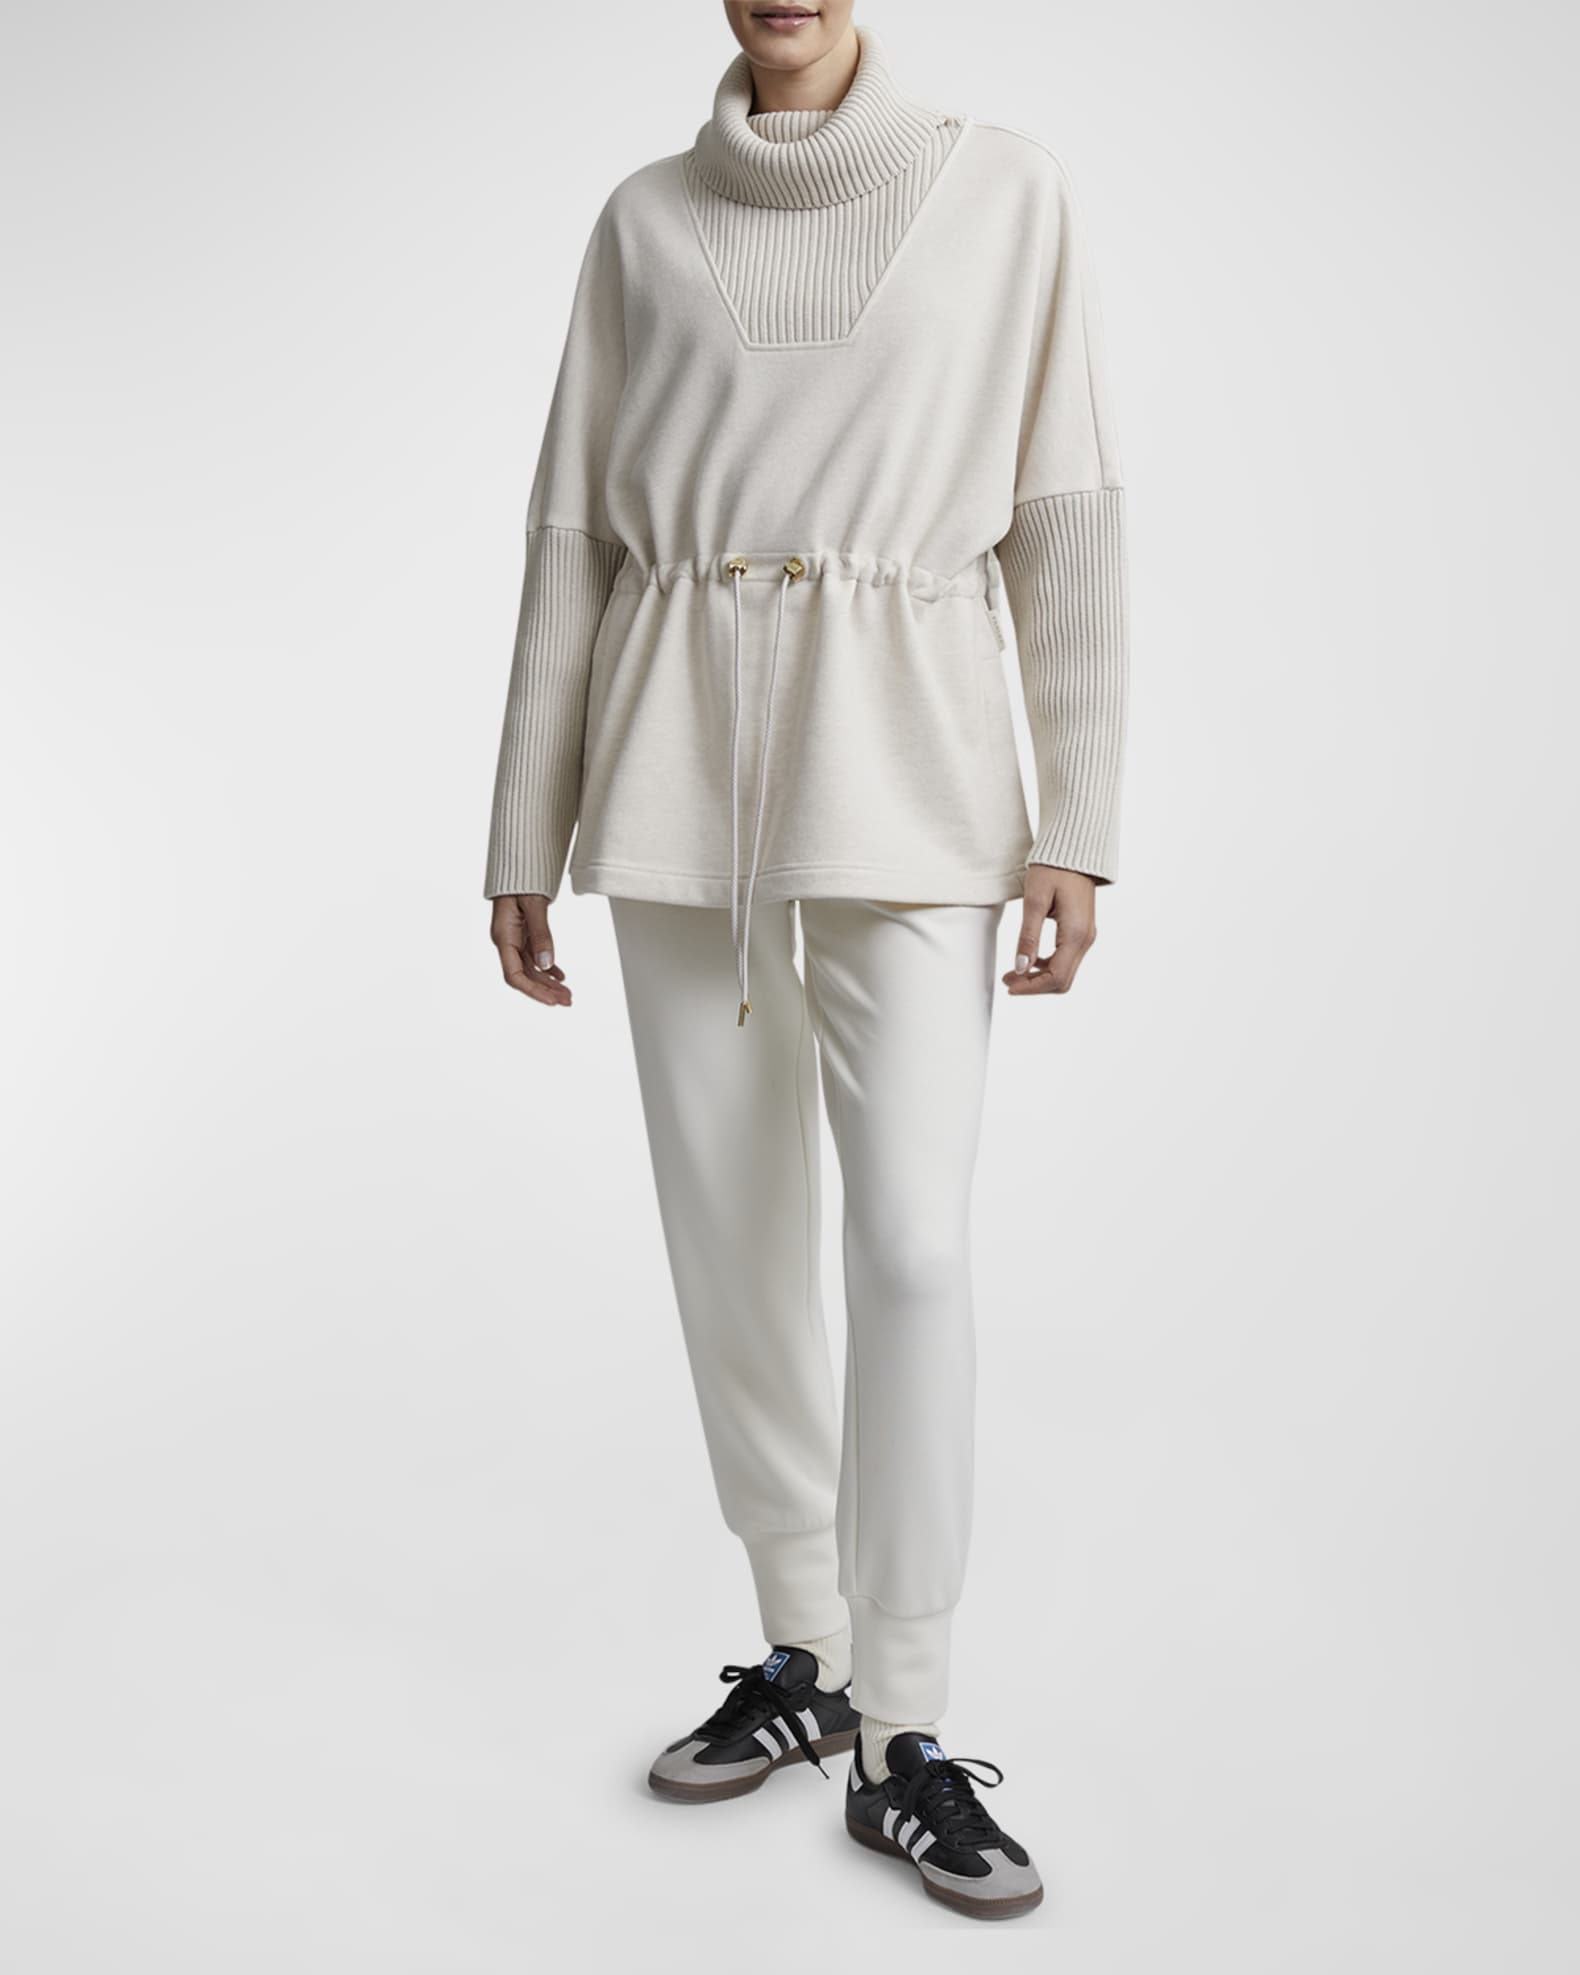 Varley Cavello Longline Turtleneck Sweater | Neiman Marcus